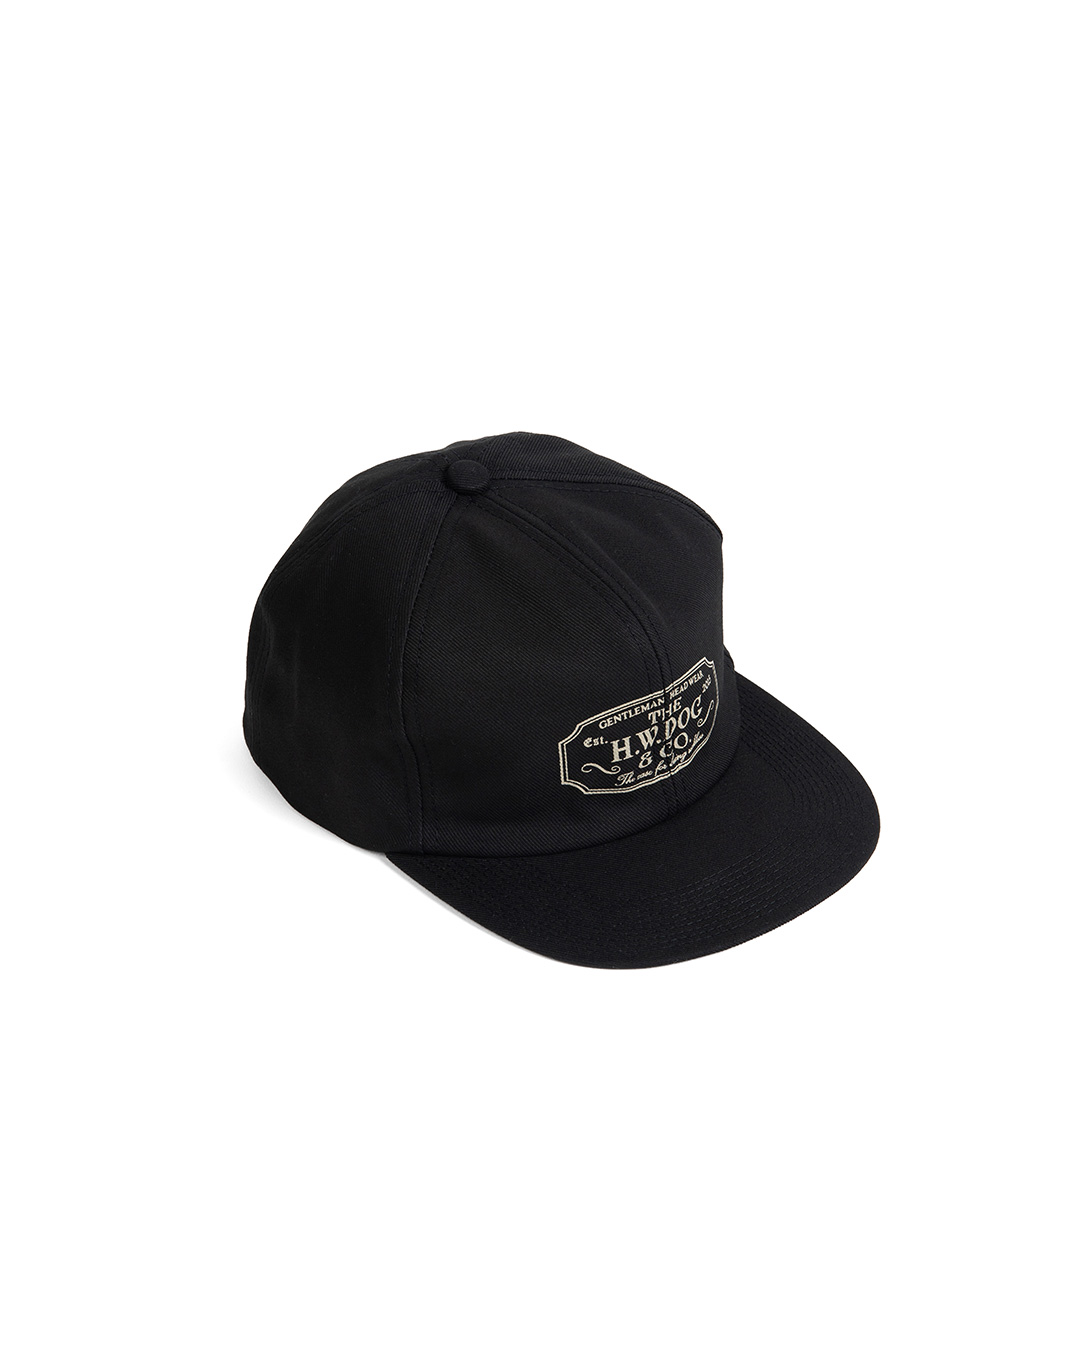 TRUCKER CAP (black)